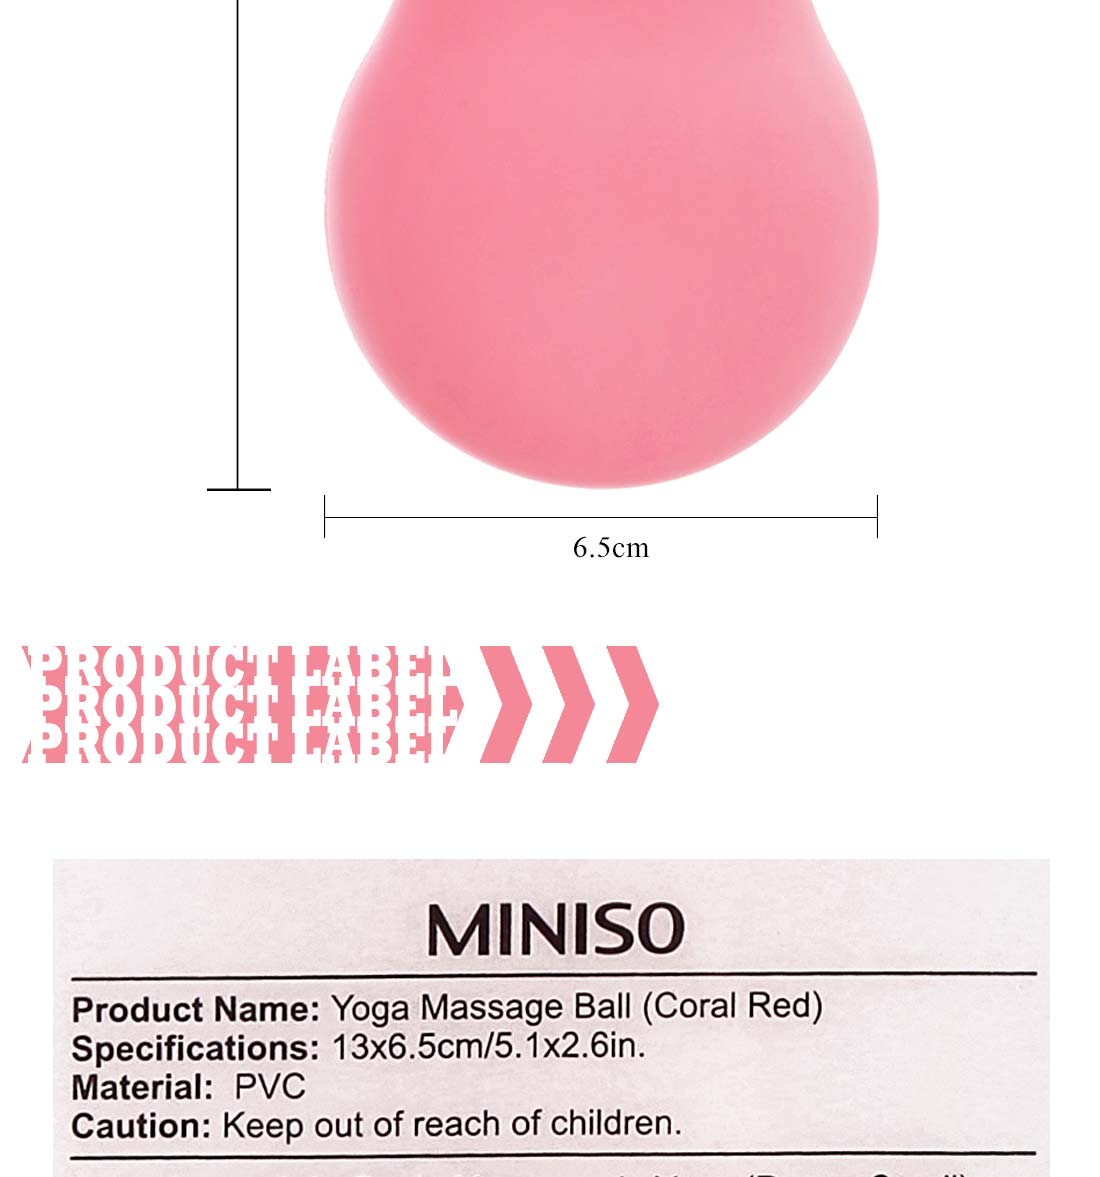 MINISO YOGA MASSAGE BALL,CORAL RED 2007186810100 YOGA ACCESSORIES